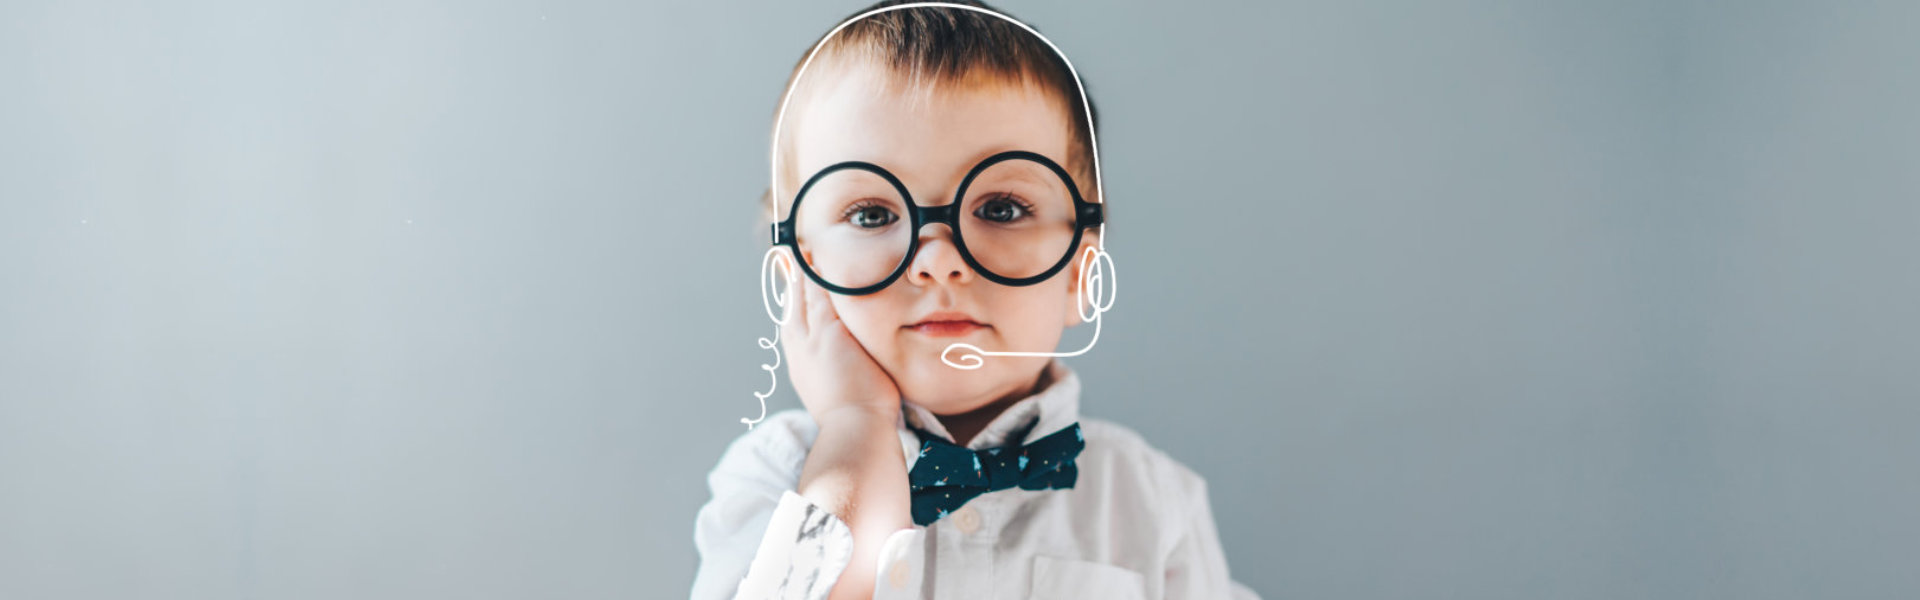 Cute little genius baby boy wearing smart outfit